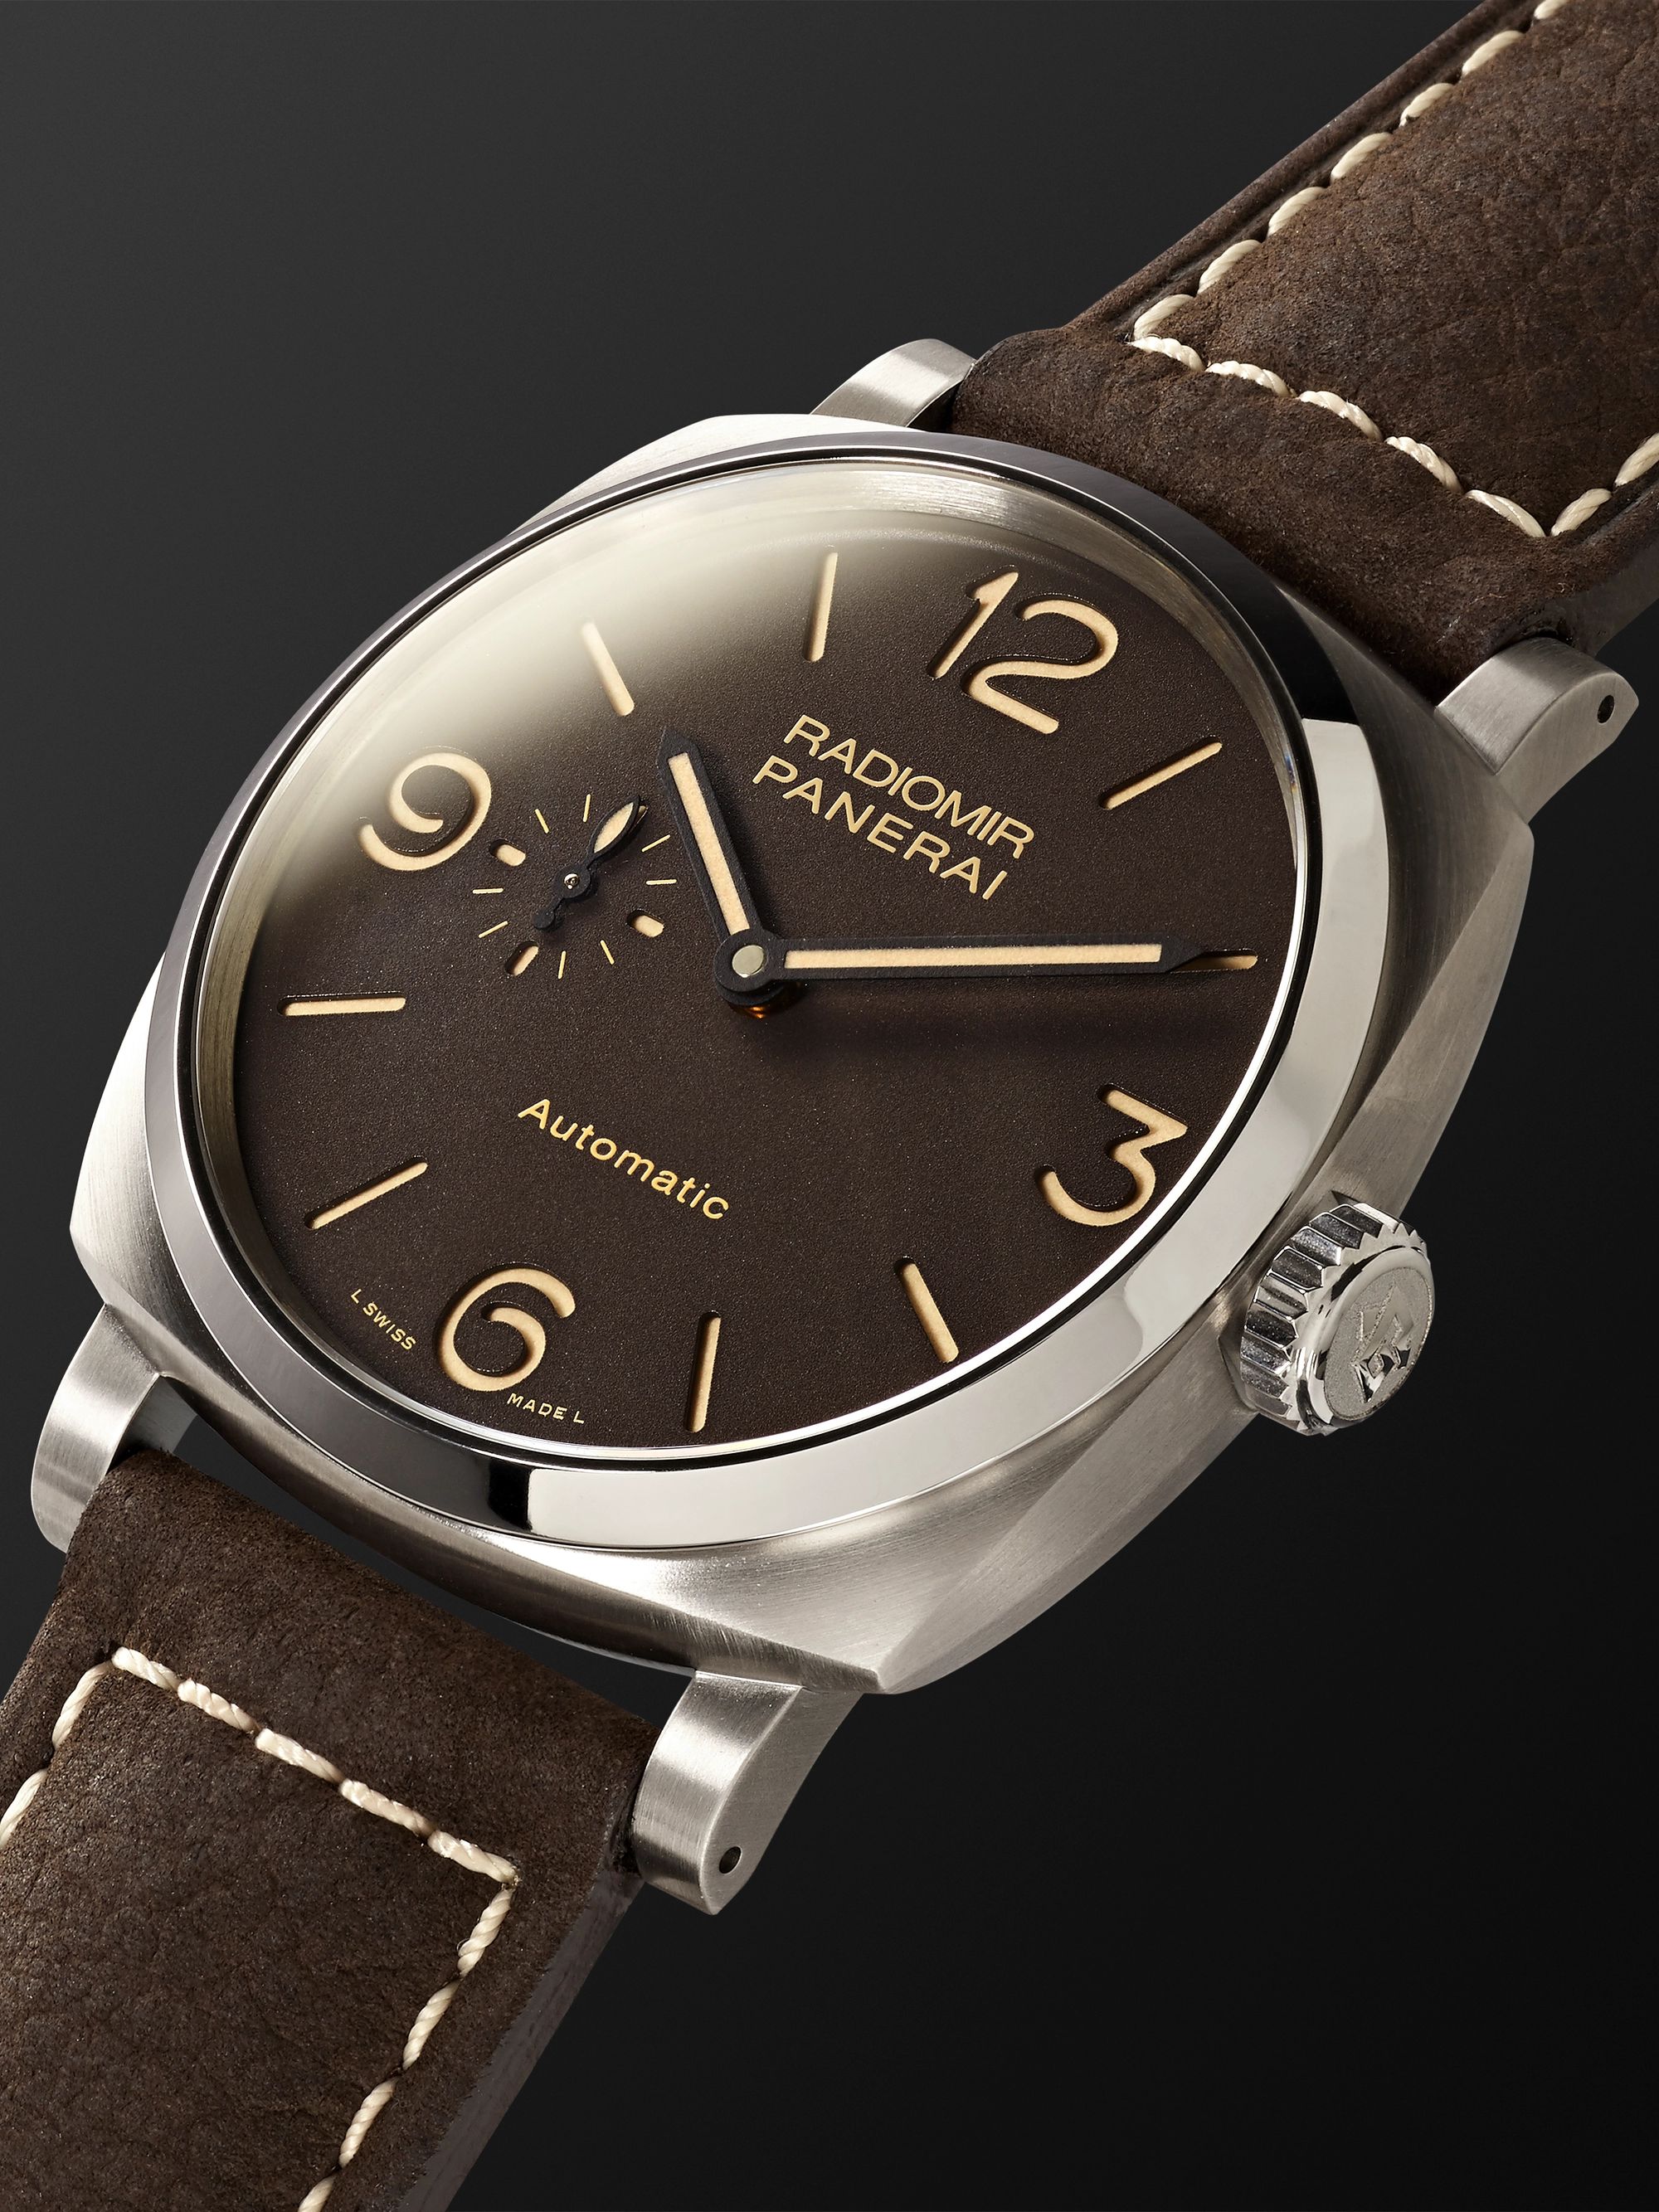 PANERAI Radiomir 1940 3 Days Automatic Titanio 45mm Titanium and Leather Watch, Ref. No. PAM00619